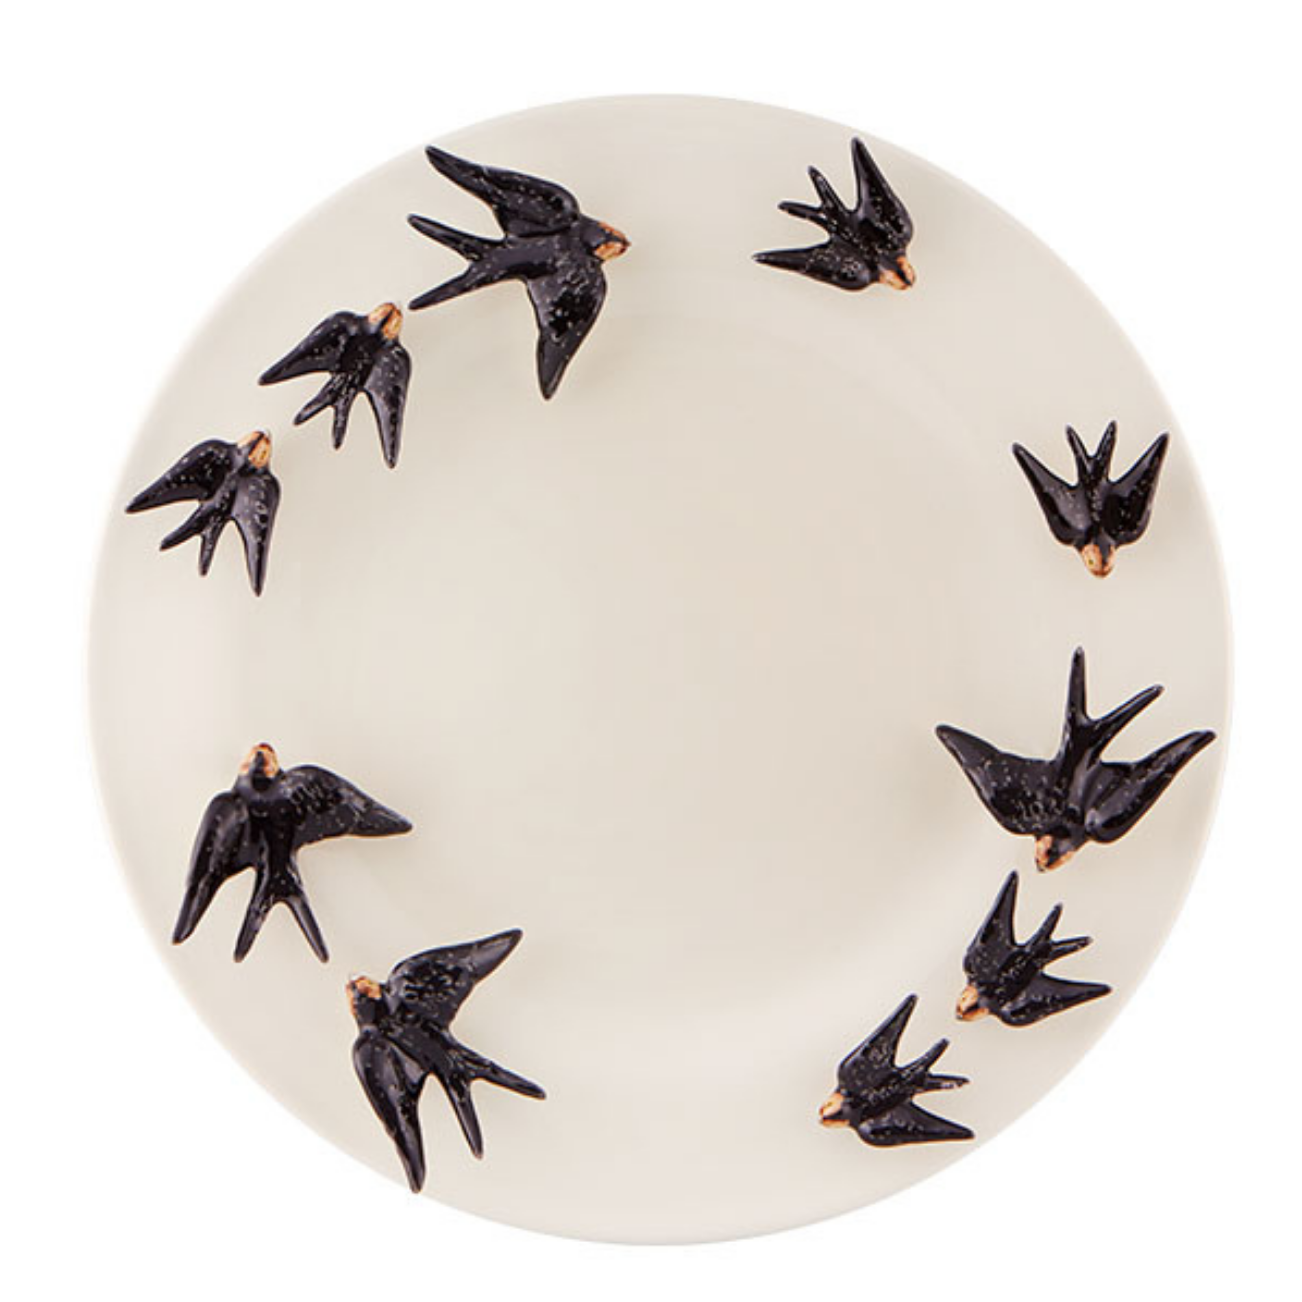 Bordallo Pinheiro - South Africa - Spring Plate with Swallows